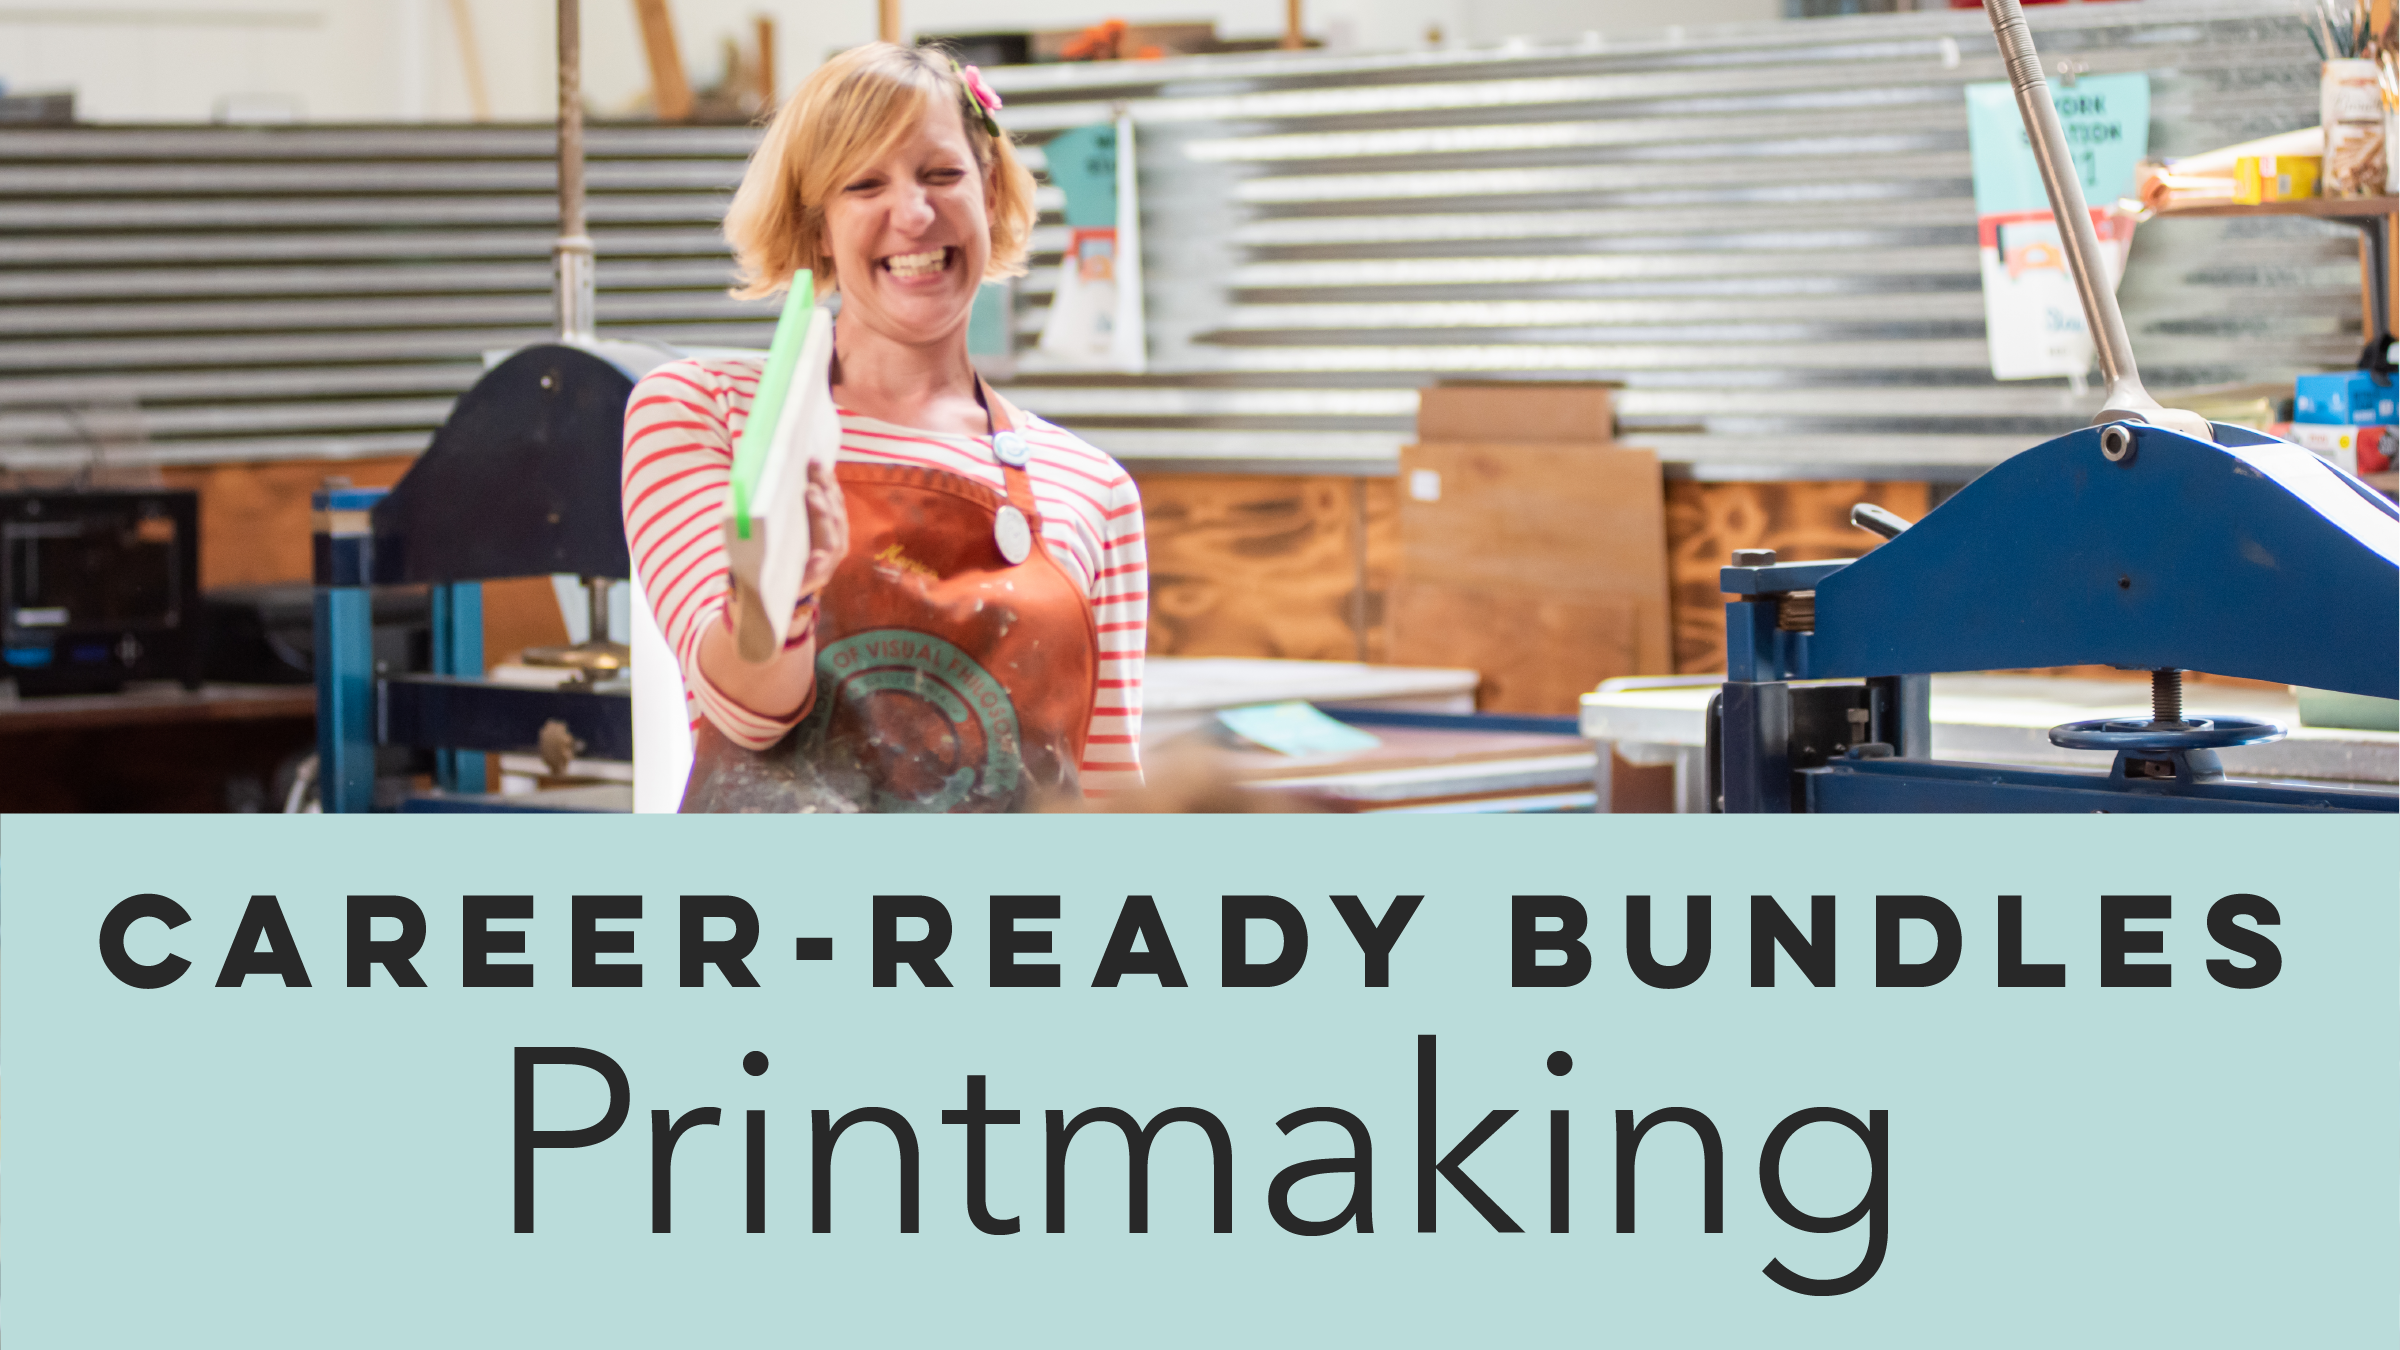 Dana Harris Seeger smiling while holding a printmaking tool.